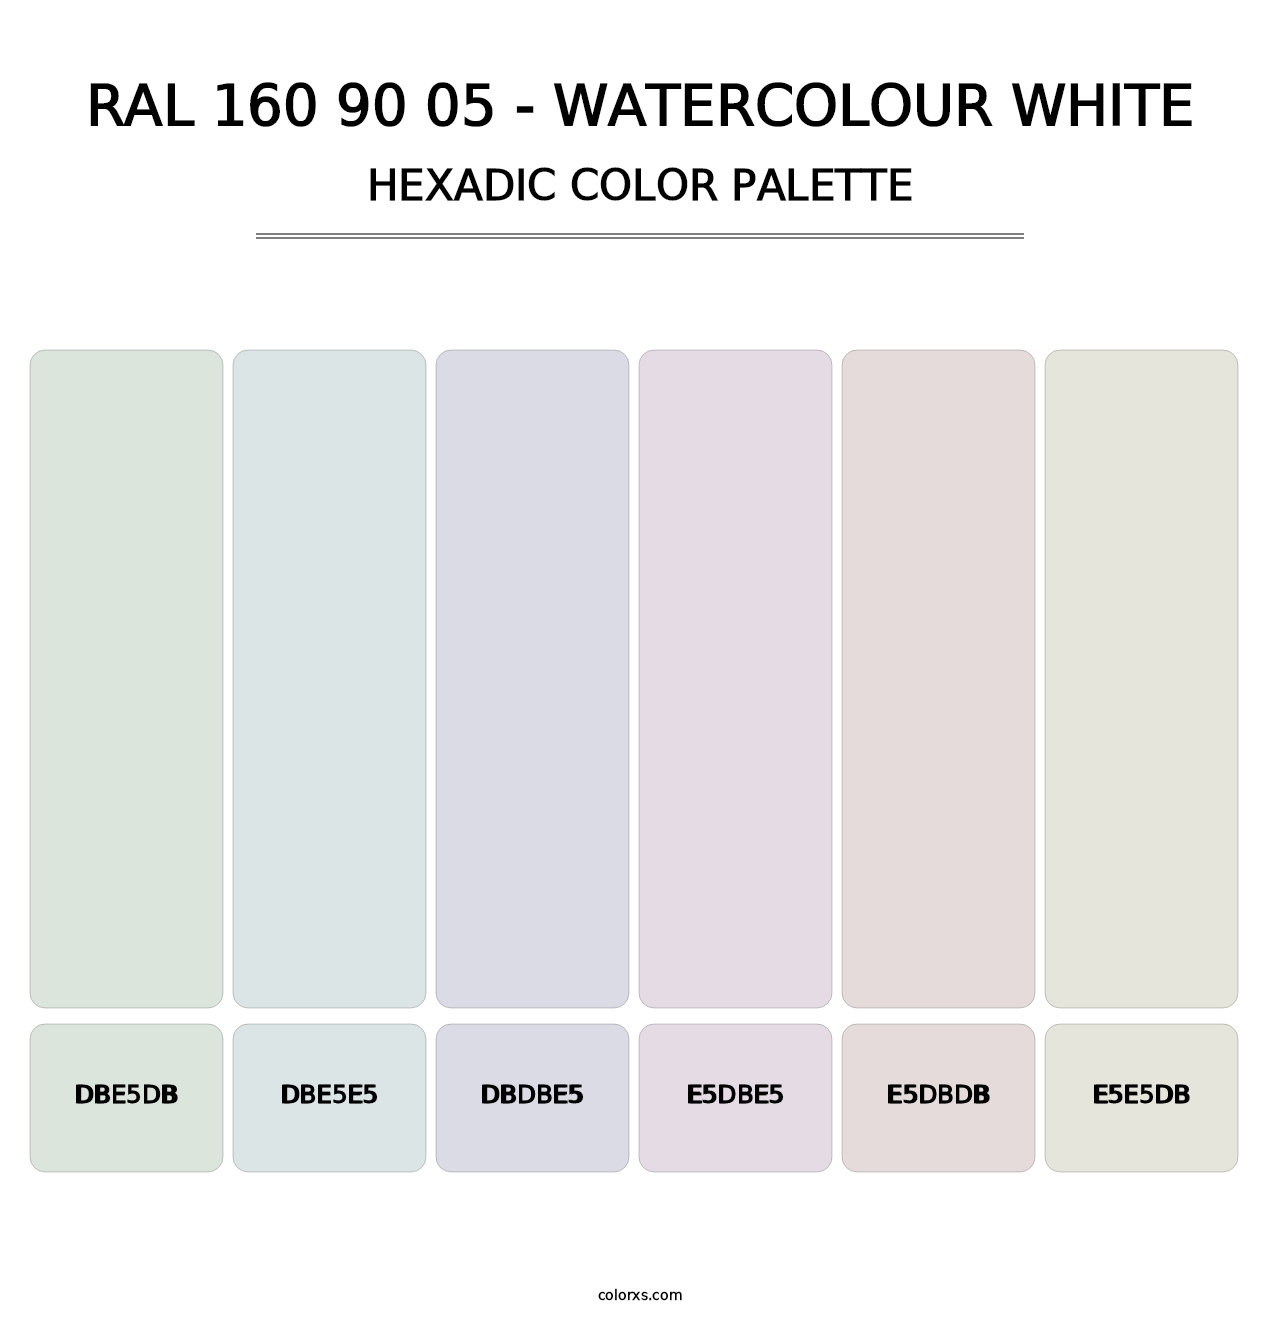 RAL 160 90 05 - Watercolour White - Hexadic Color Palette